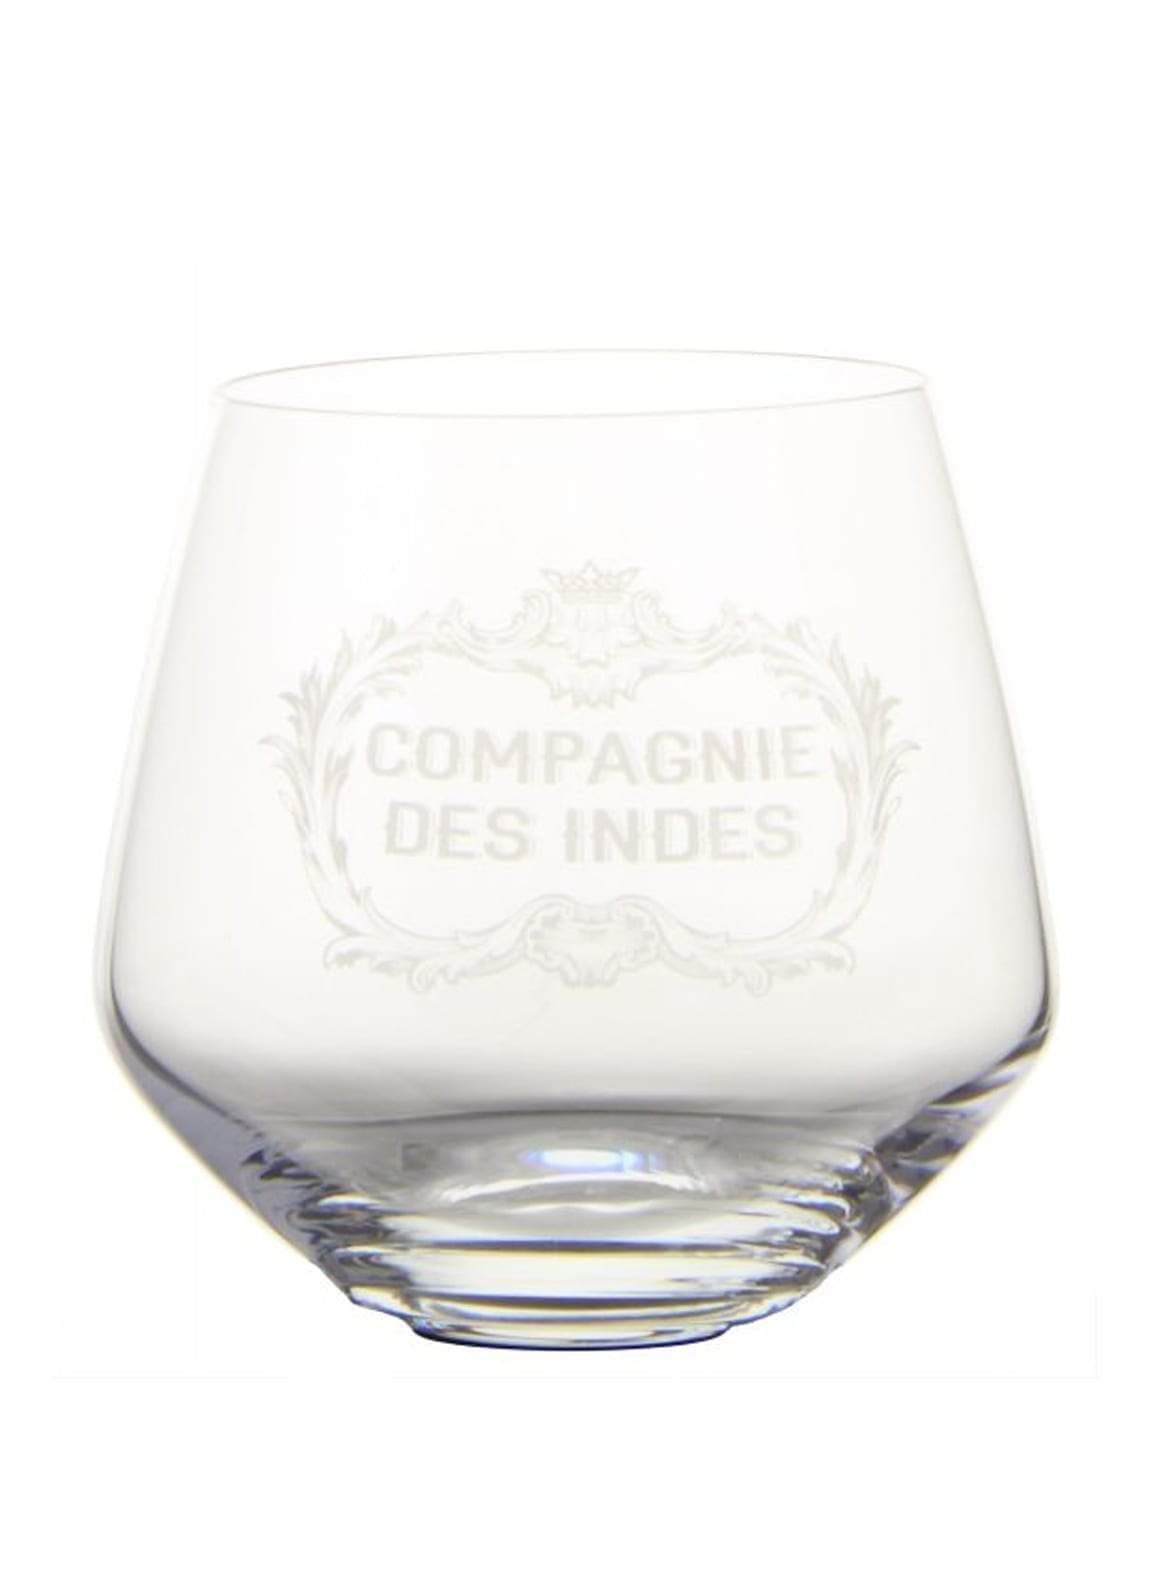 Compagnie des Indes Engraved Rum Balloon Glasses | Glass | Shop online at Spirits of France